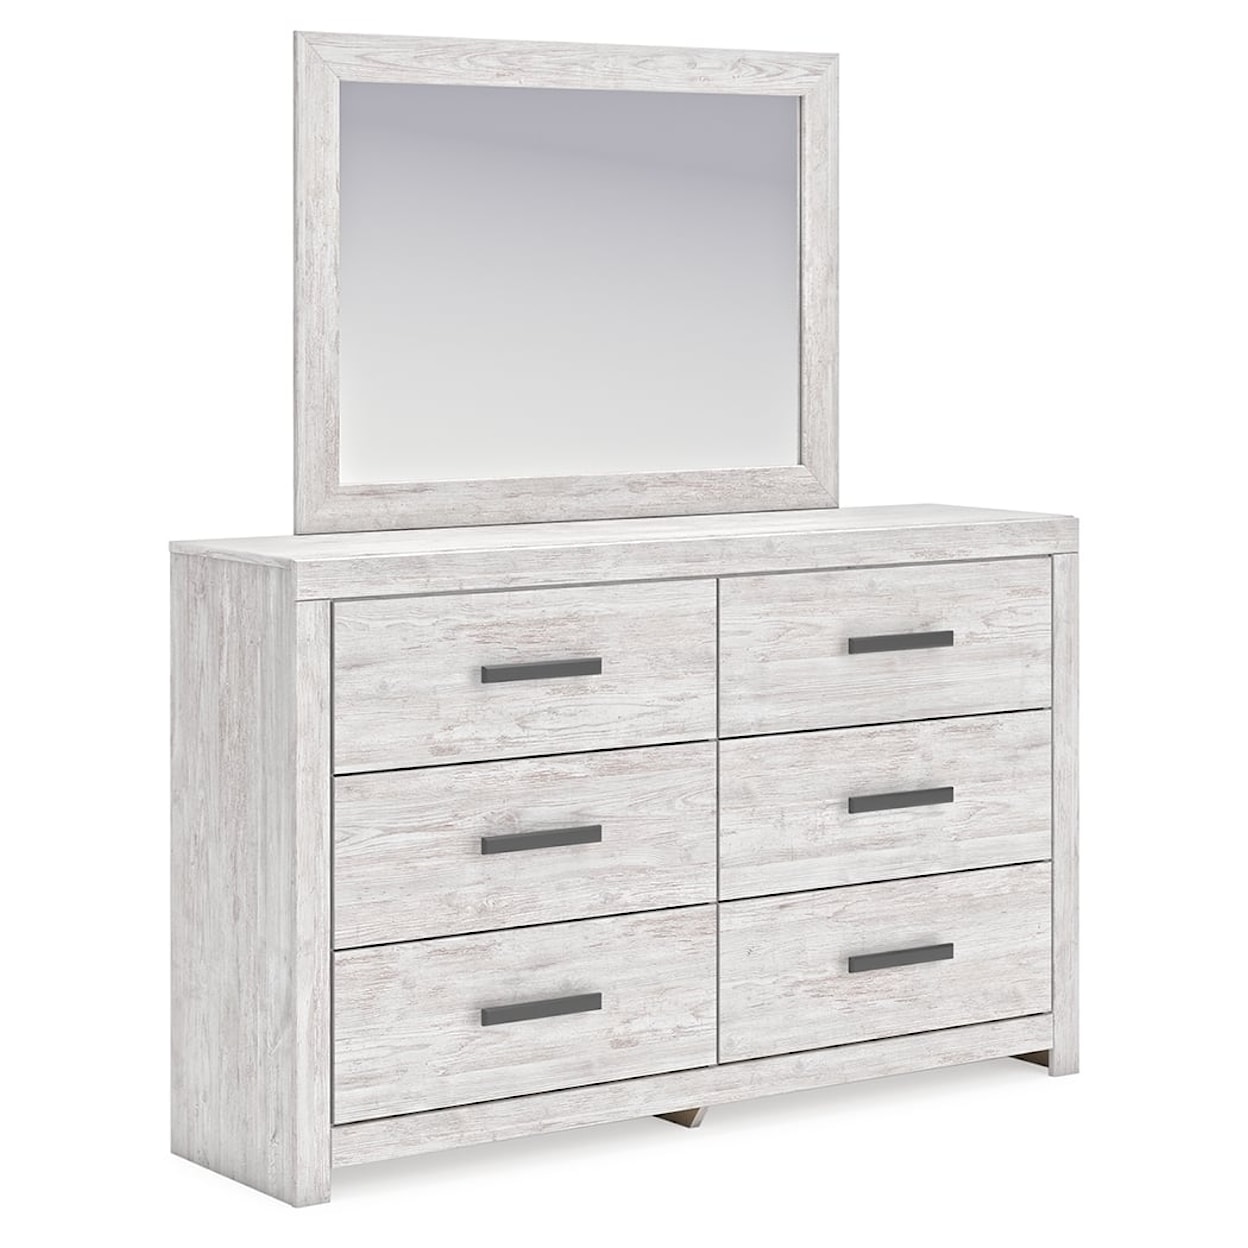 Ashley Furniture Signature Design Cayboni Bedroom Mirror